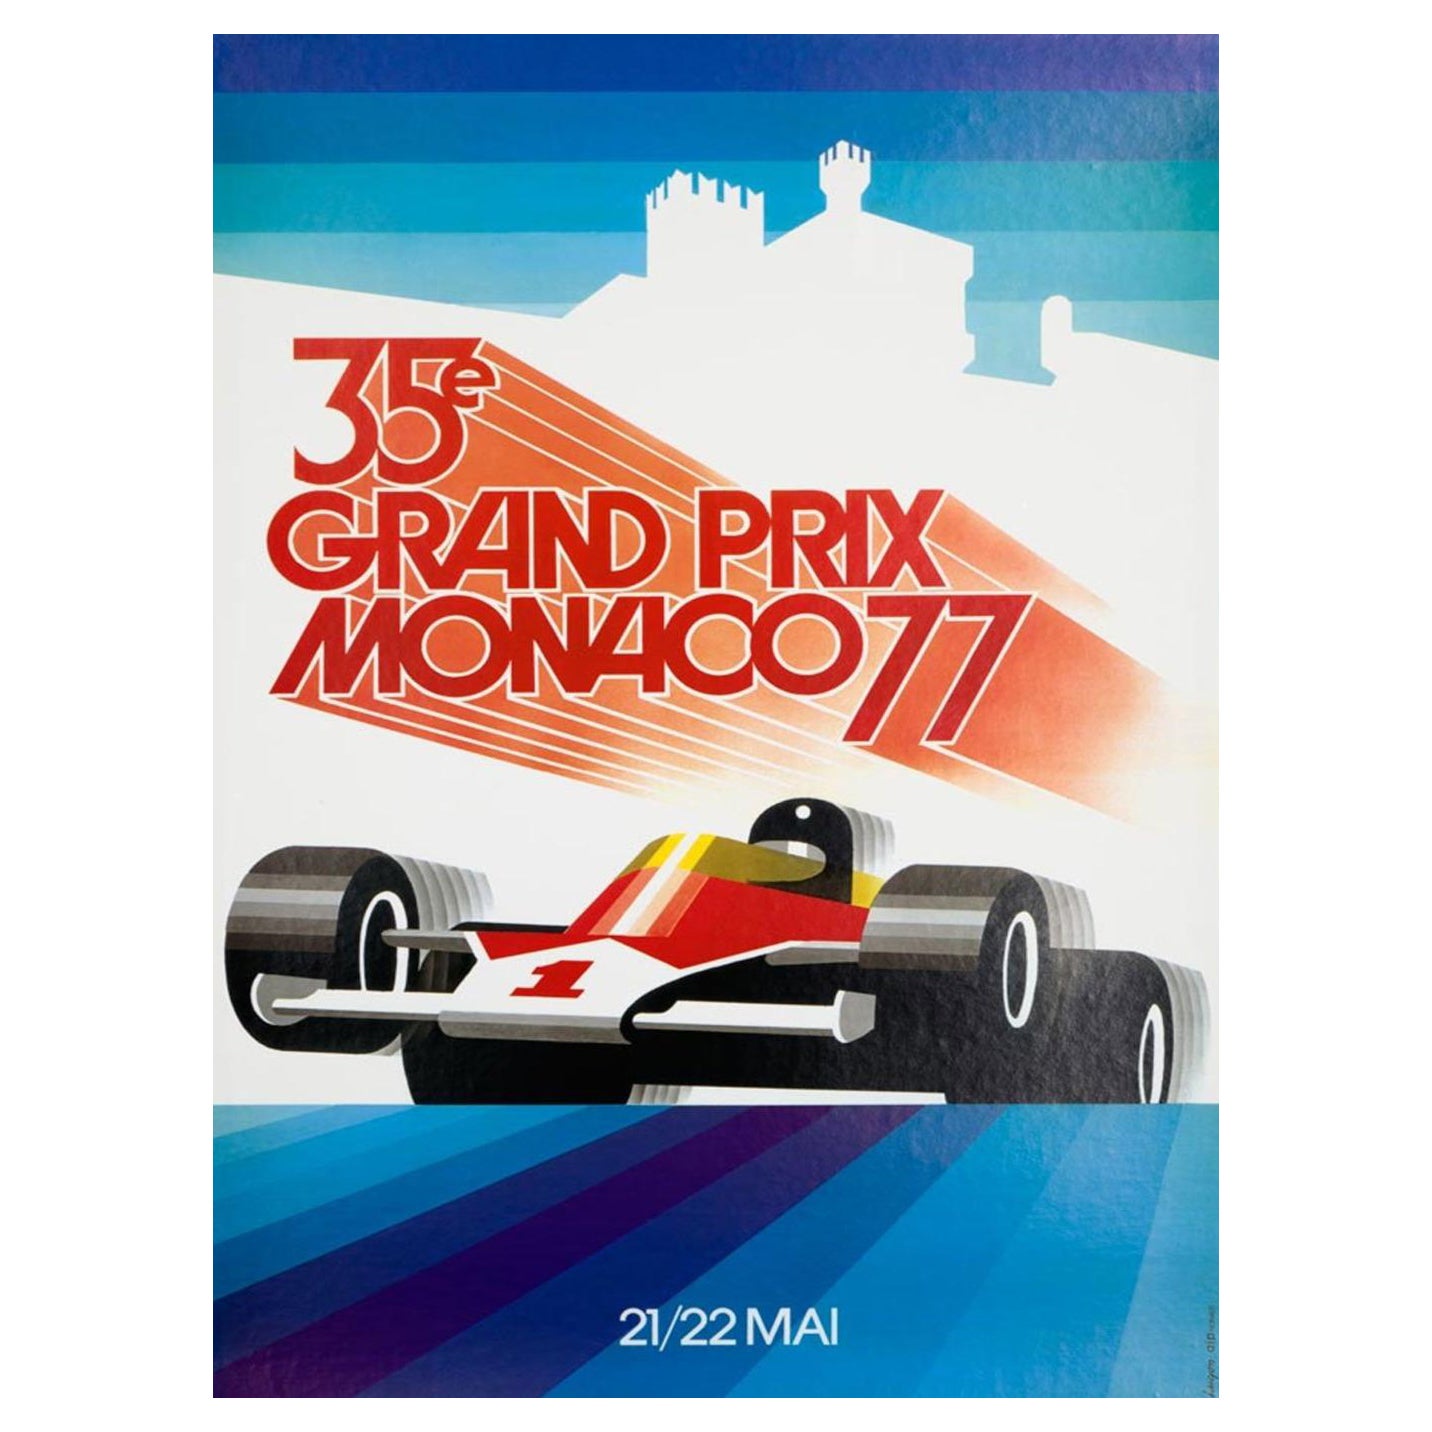 Affiche vintage originale du Grand Prix de Monaco de 1977 en vente